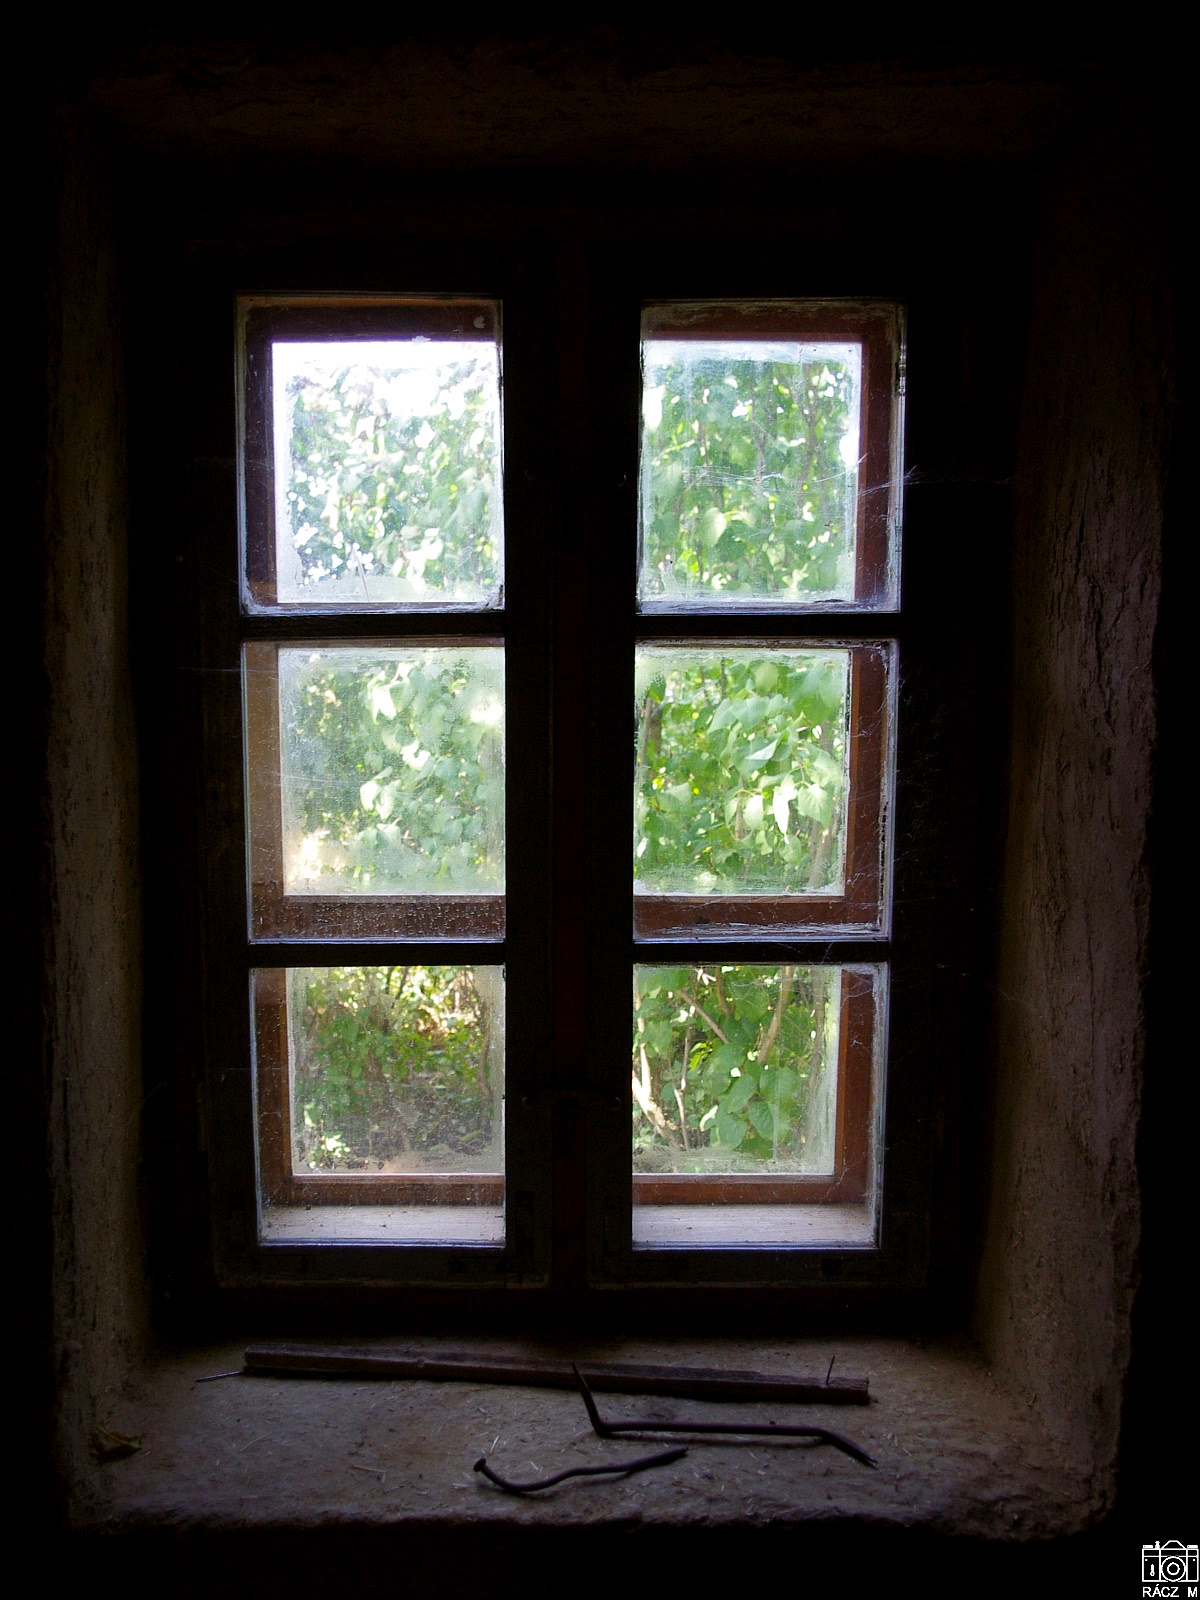 kamra (?) ablak belülről, 2013